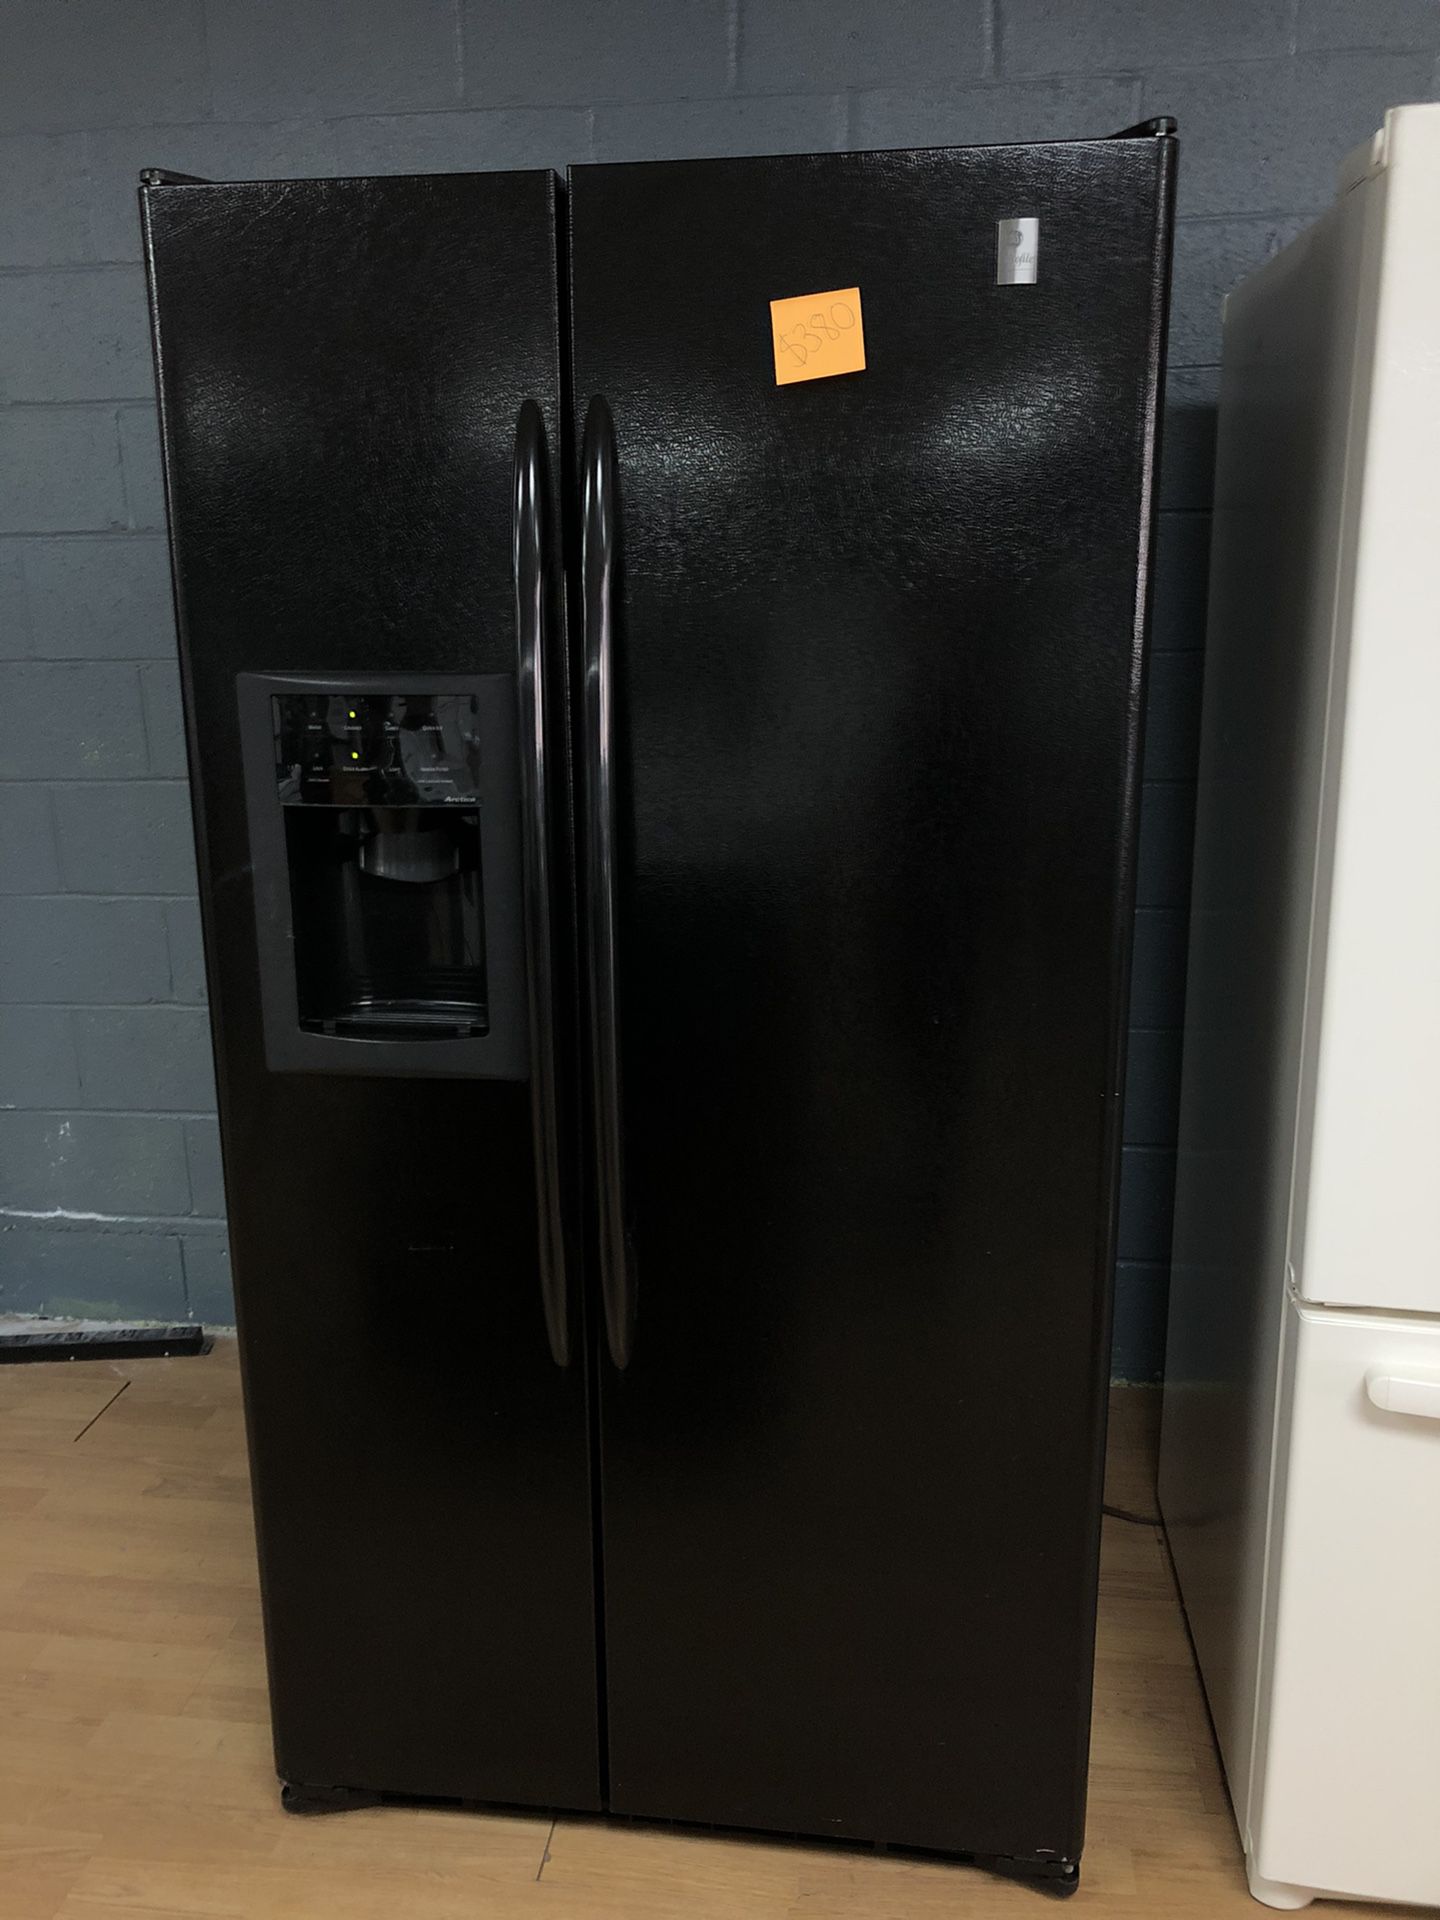 GE black side by side refrigerator